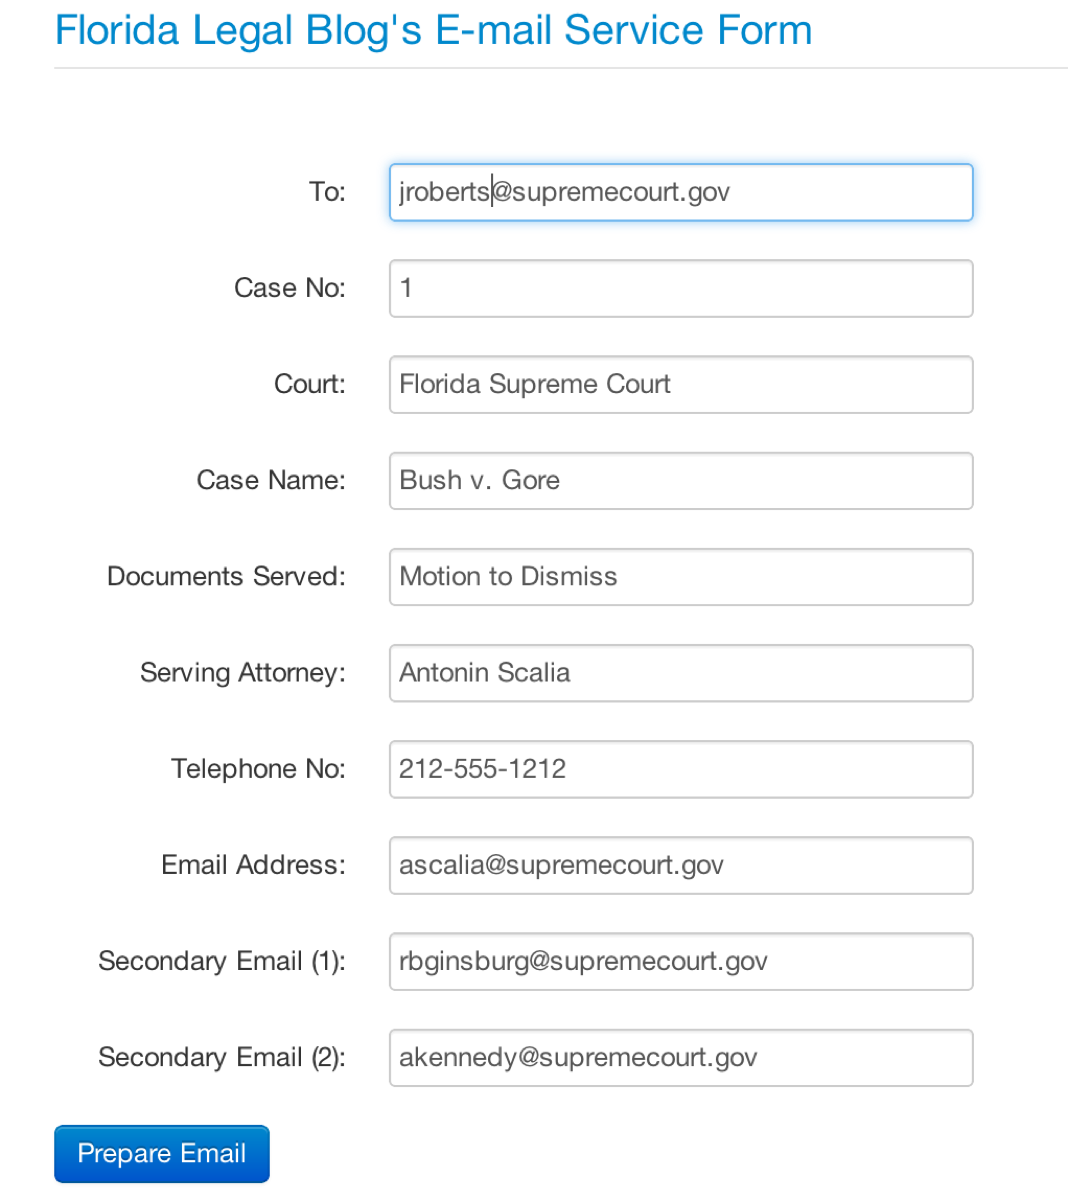 E-Mail Service Form